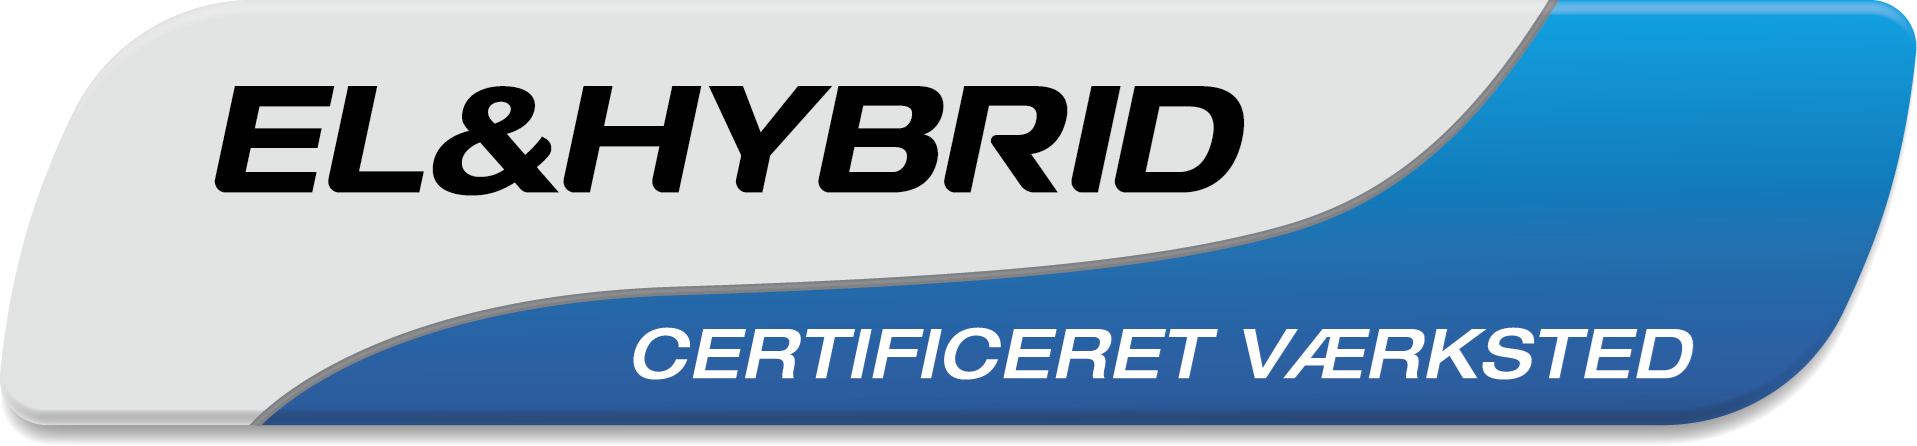 el_hybrid_certificeretvaerksted